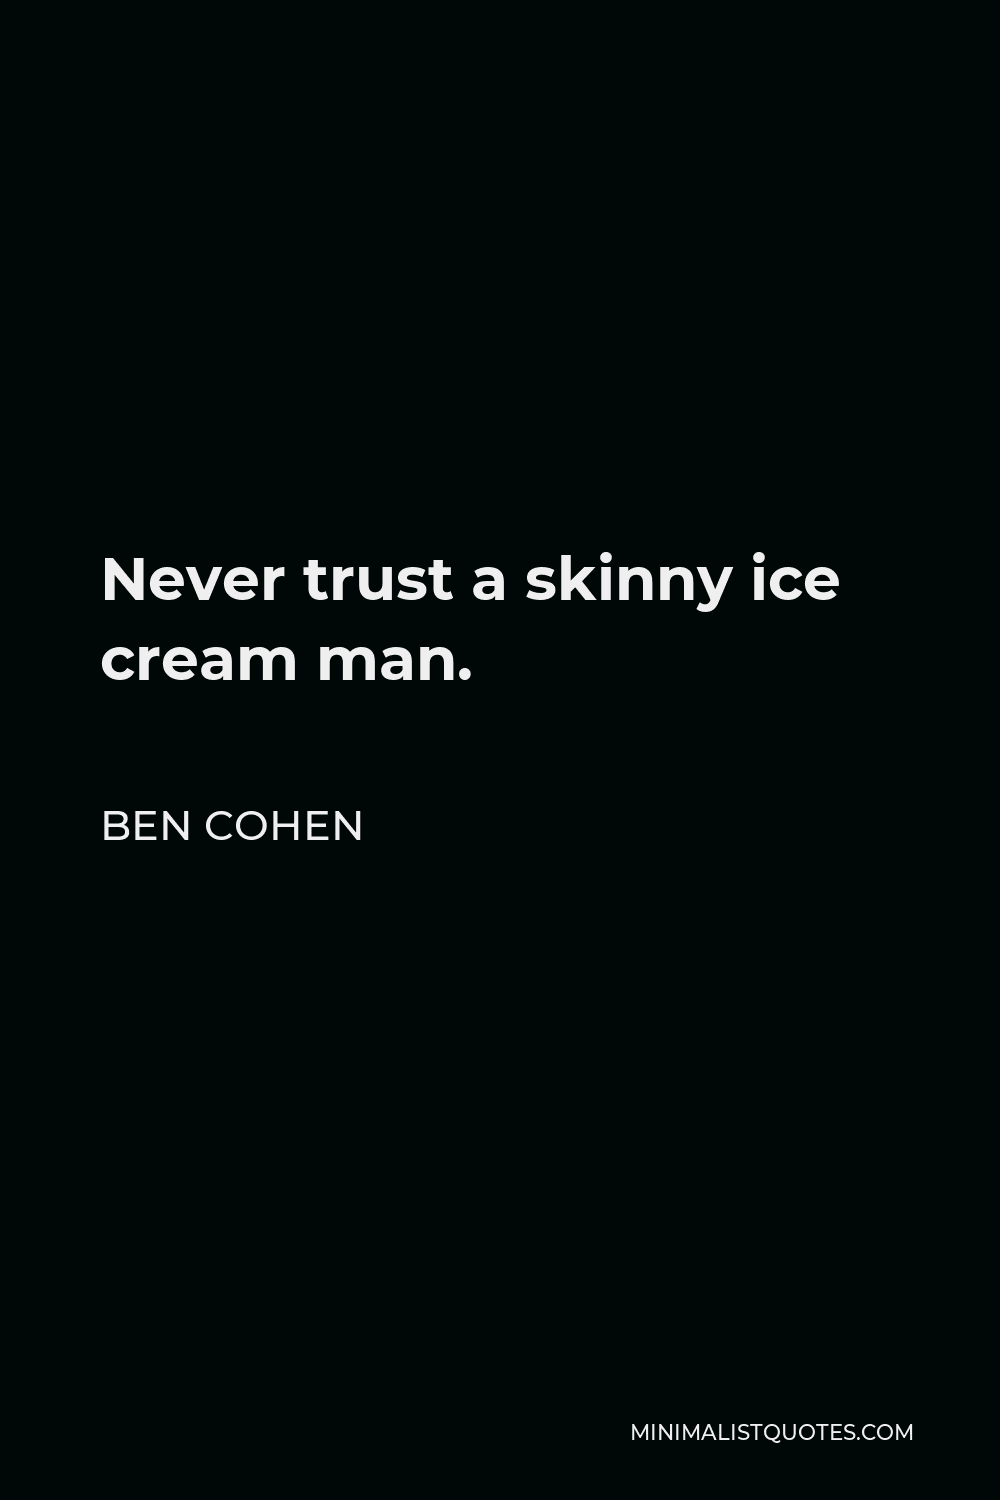 Ben Cohen Quote - Never trust a skinny ice cream man.